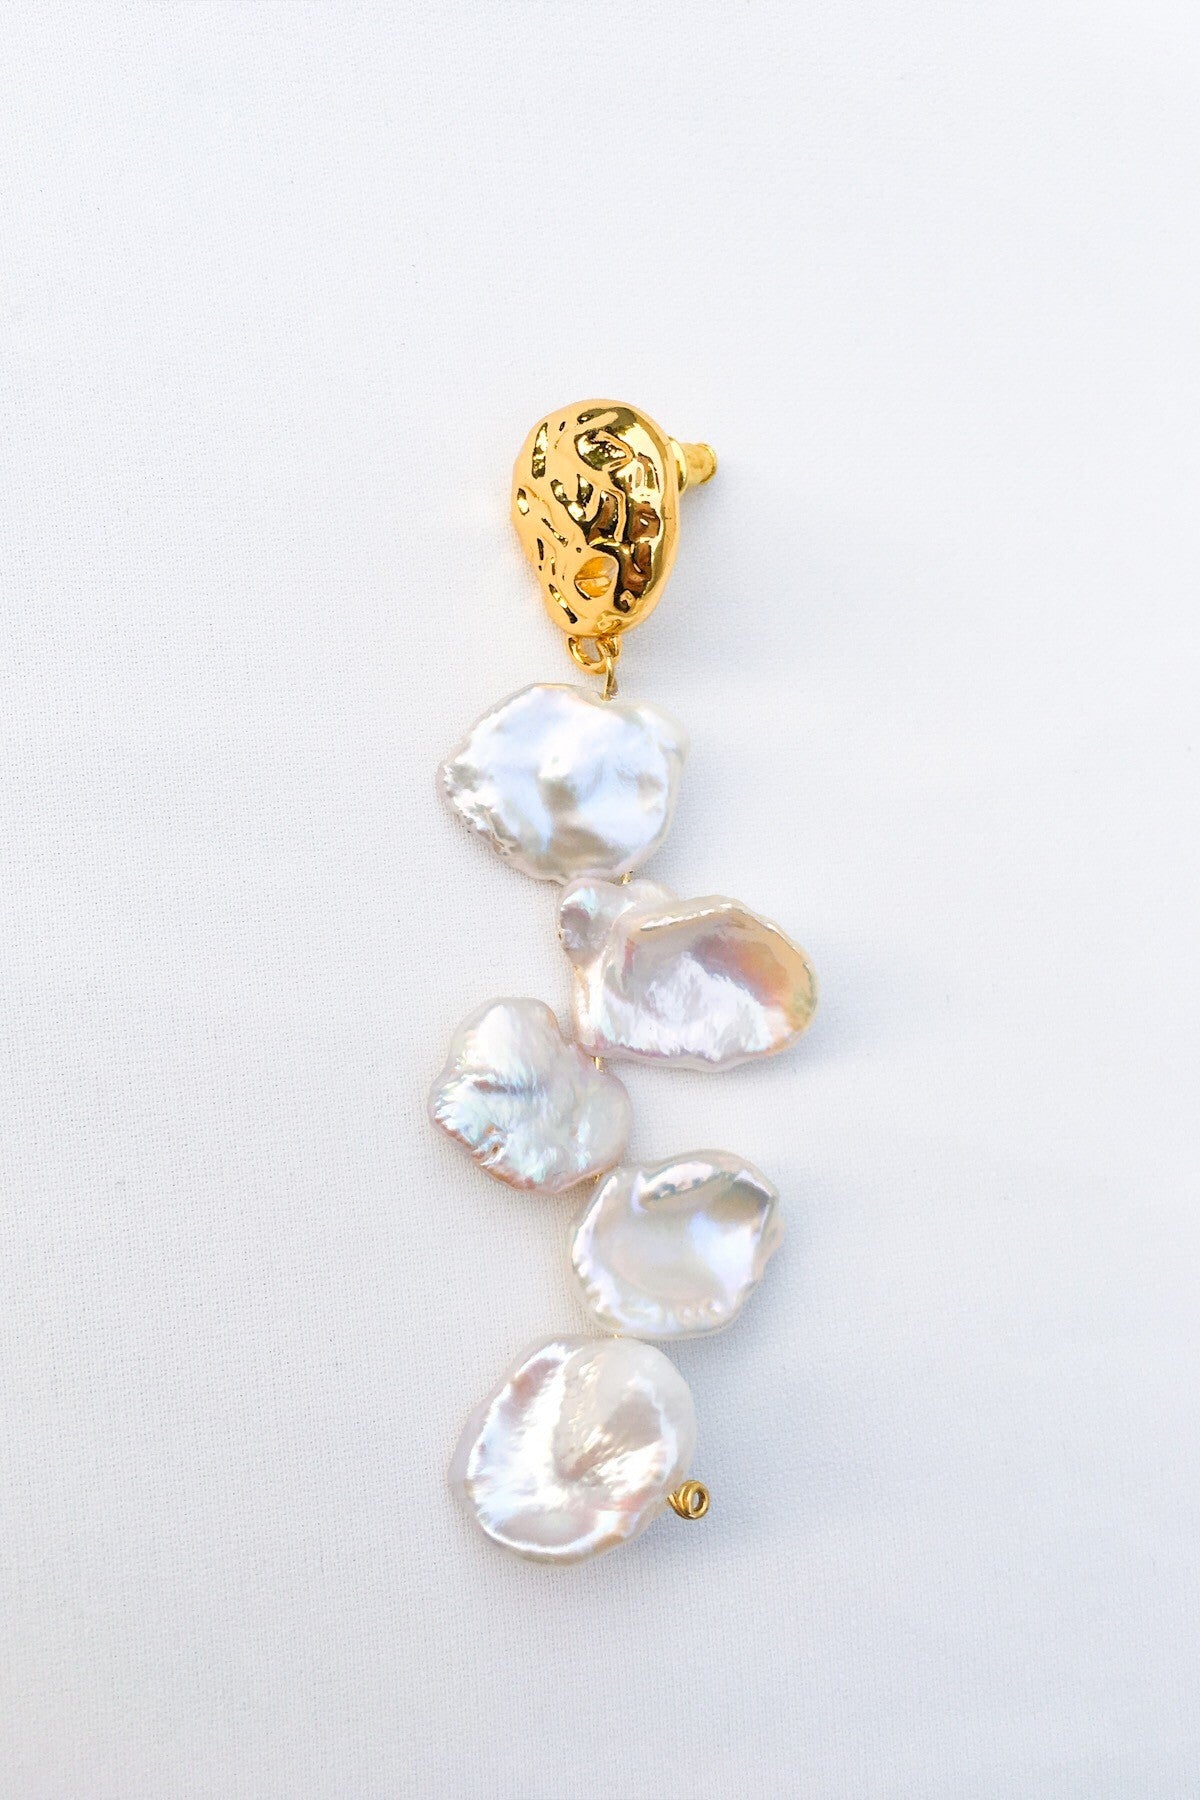 SKYE San Francisco SF California shop ethical sustainable modern minimalist quality women jewelry Seraphine 18K Gold Freshwater Pearl Earrings 8